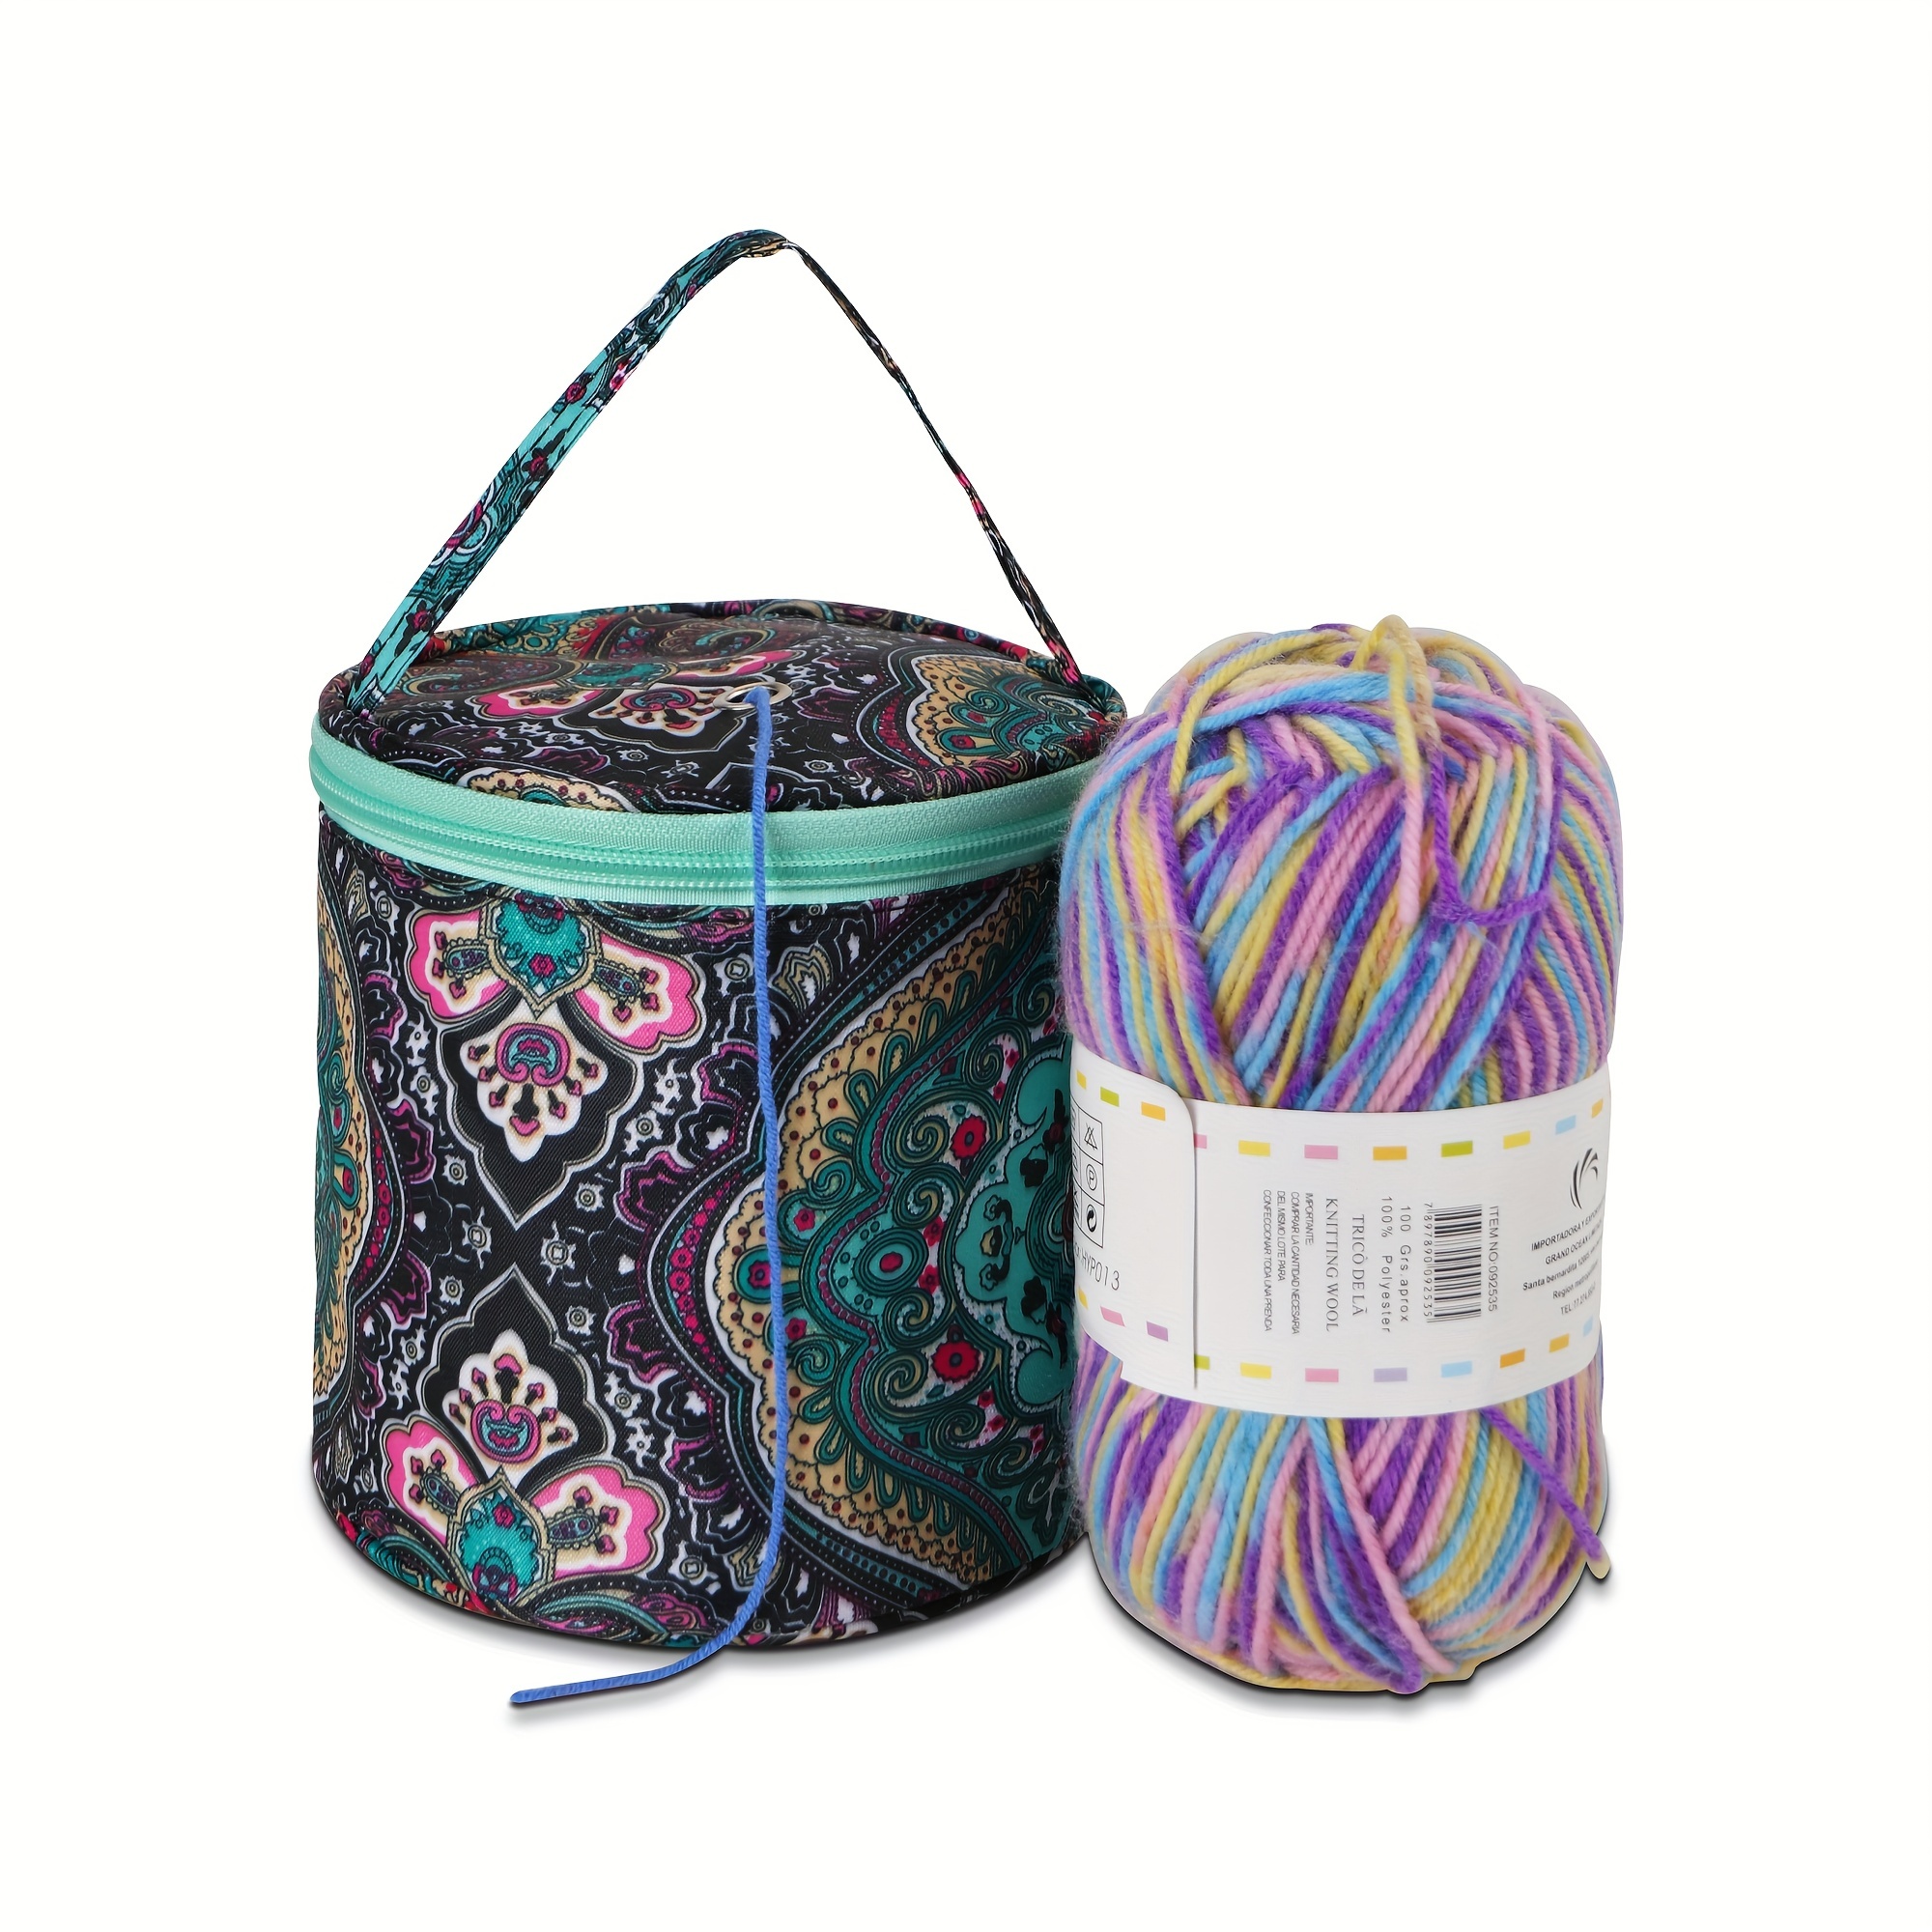 1pc Round Knitted Storage Bag, Knitted Crochet Yarn Bag, Crochet Thread  Organizer Bag, For Holding Yarn Ball, Crochet Storage Kit, Dustproof Zipper  Bag, Gift For Mom, Gift For Wife